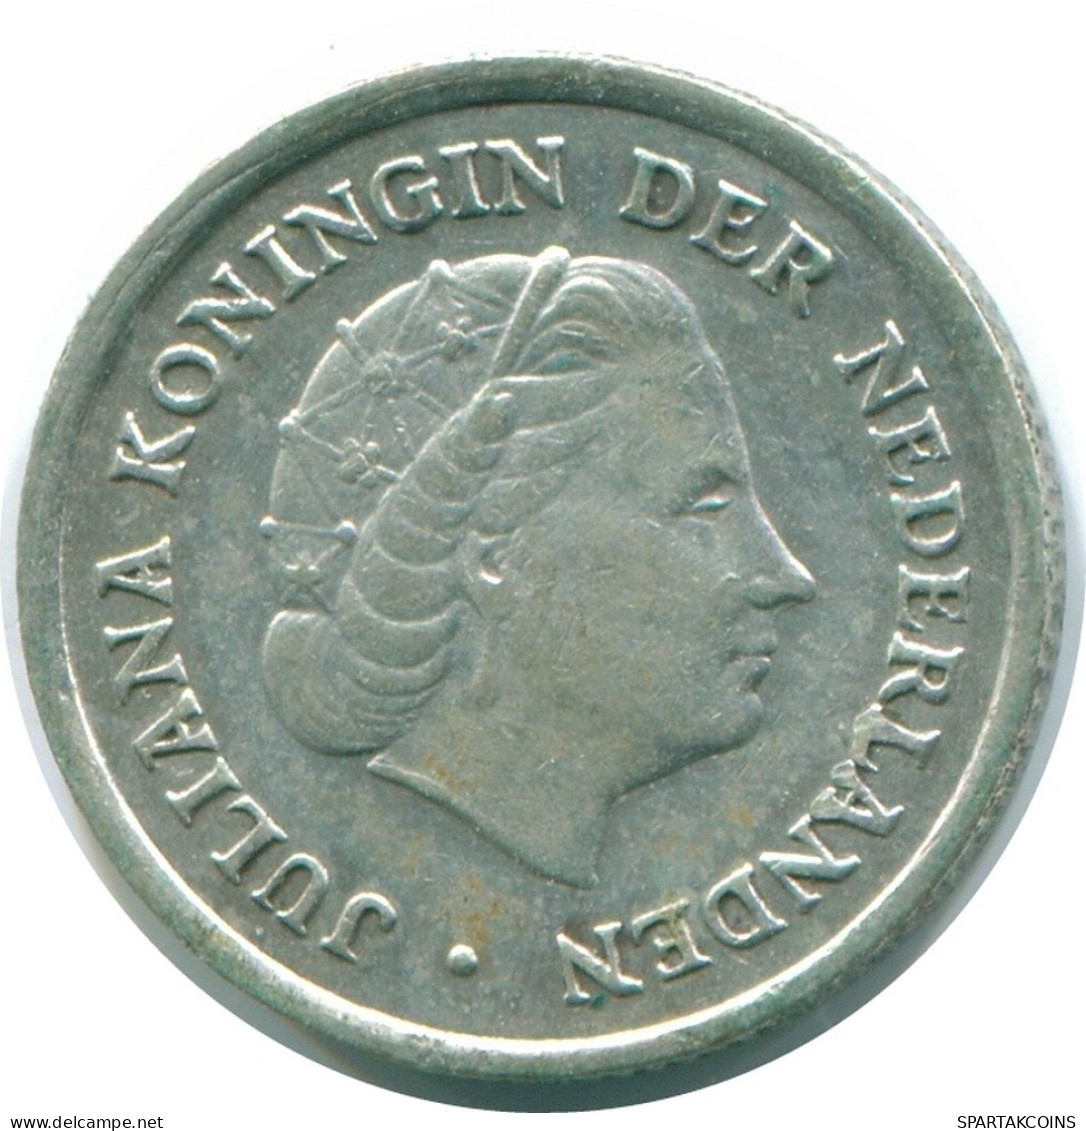 1/10 GULDEN 1970 NETHERLANDS ANTILLES SILVER Colonial Coin #NL12953.3.U.A - Niederländische Antillen